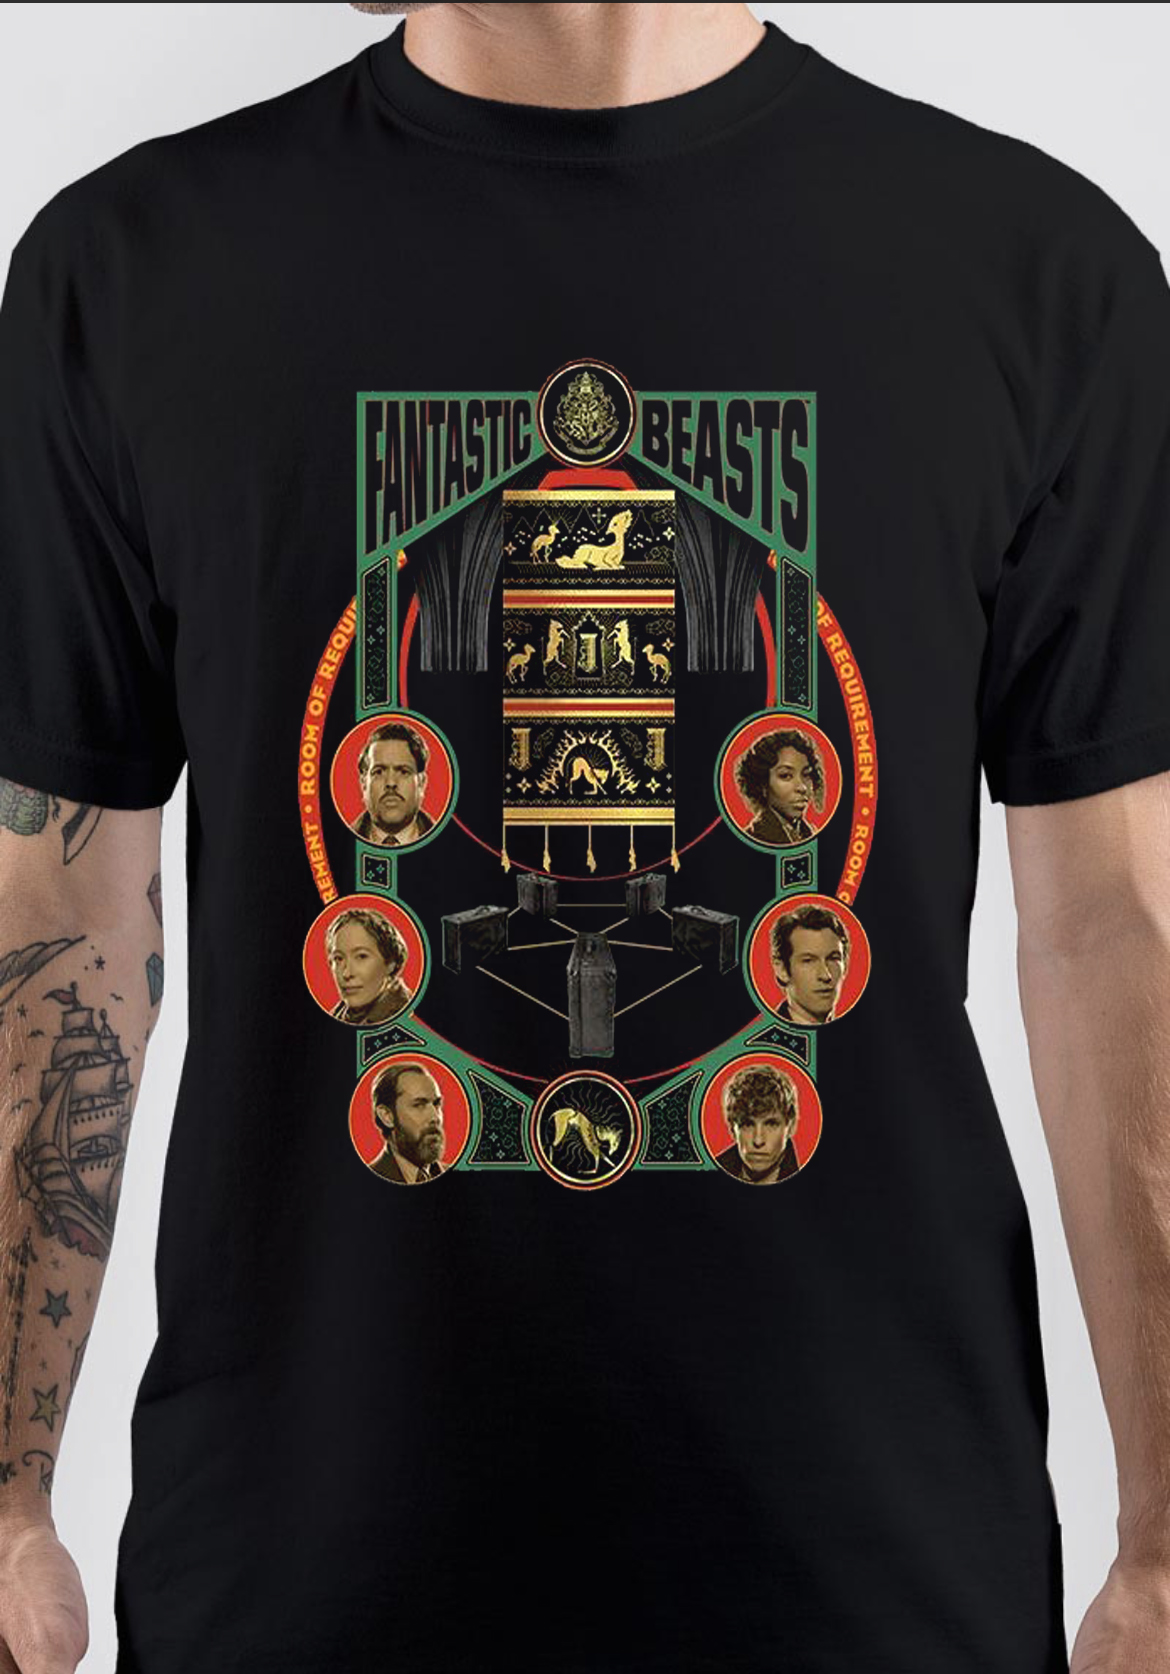 Fantastic Beasts T-Shirt And Merchandise